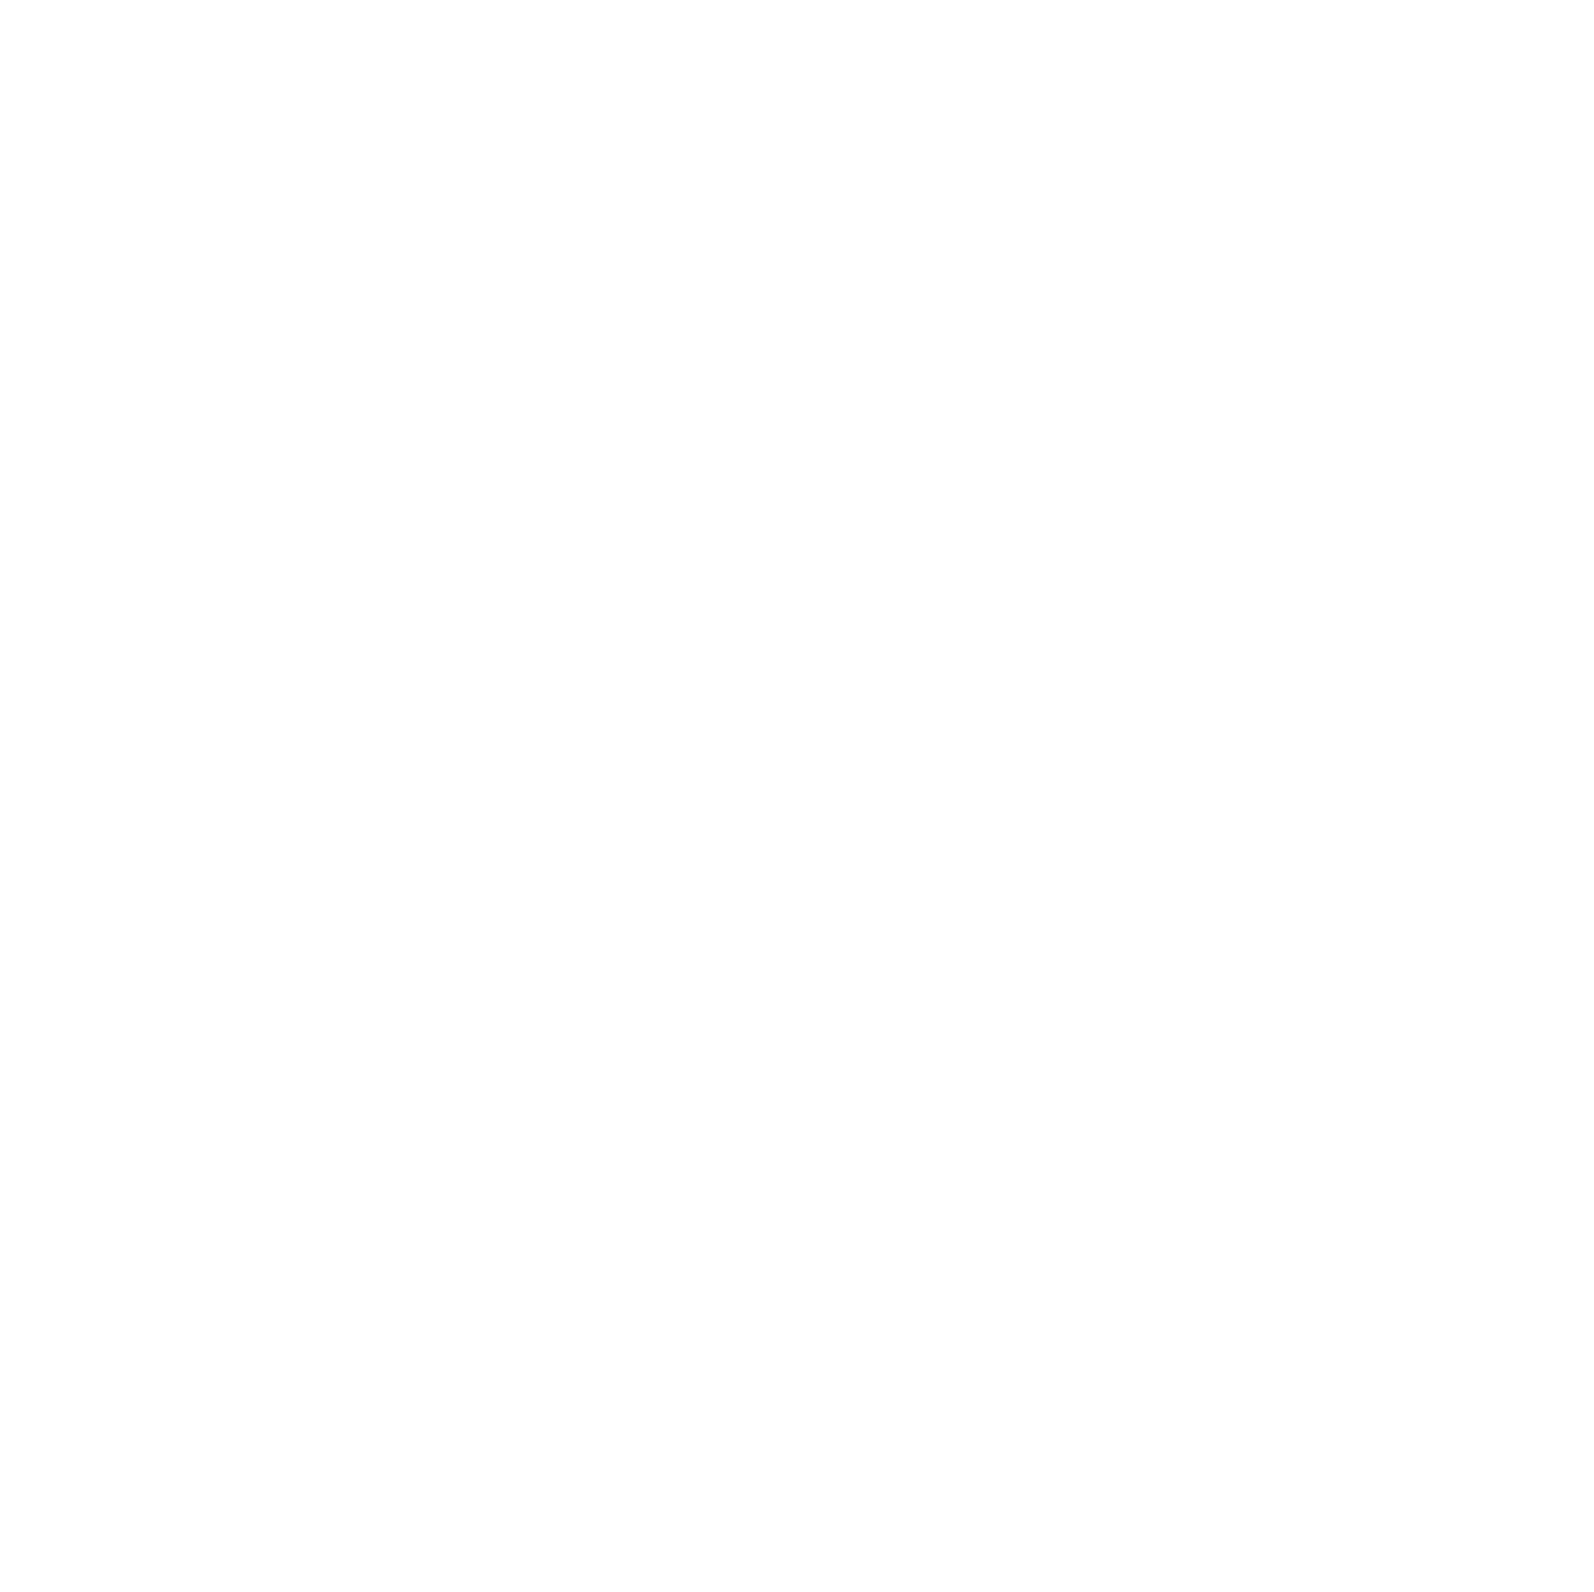 Phunware logo for dark backgrounds (transparent PNG)